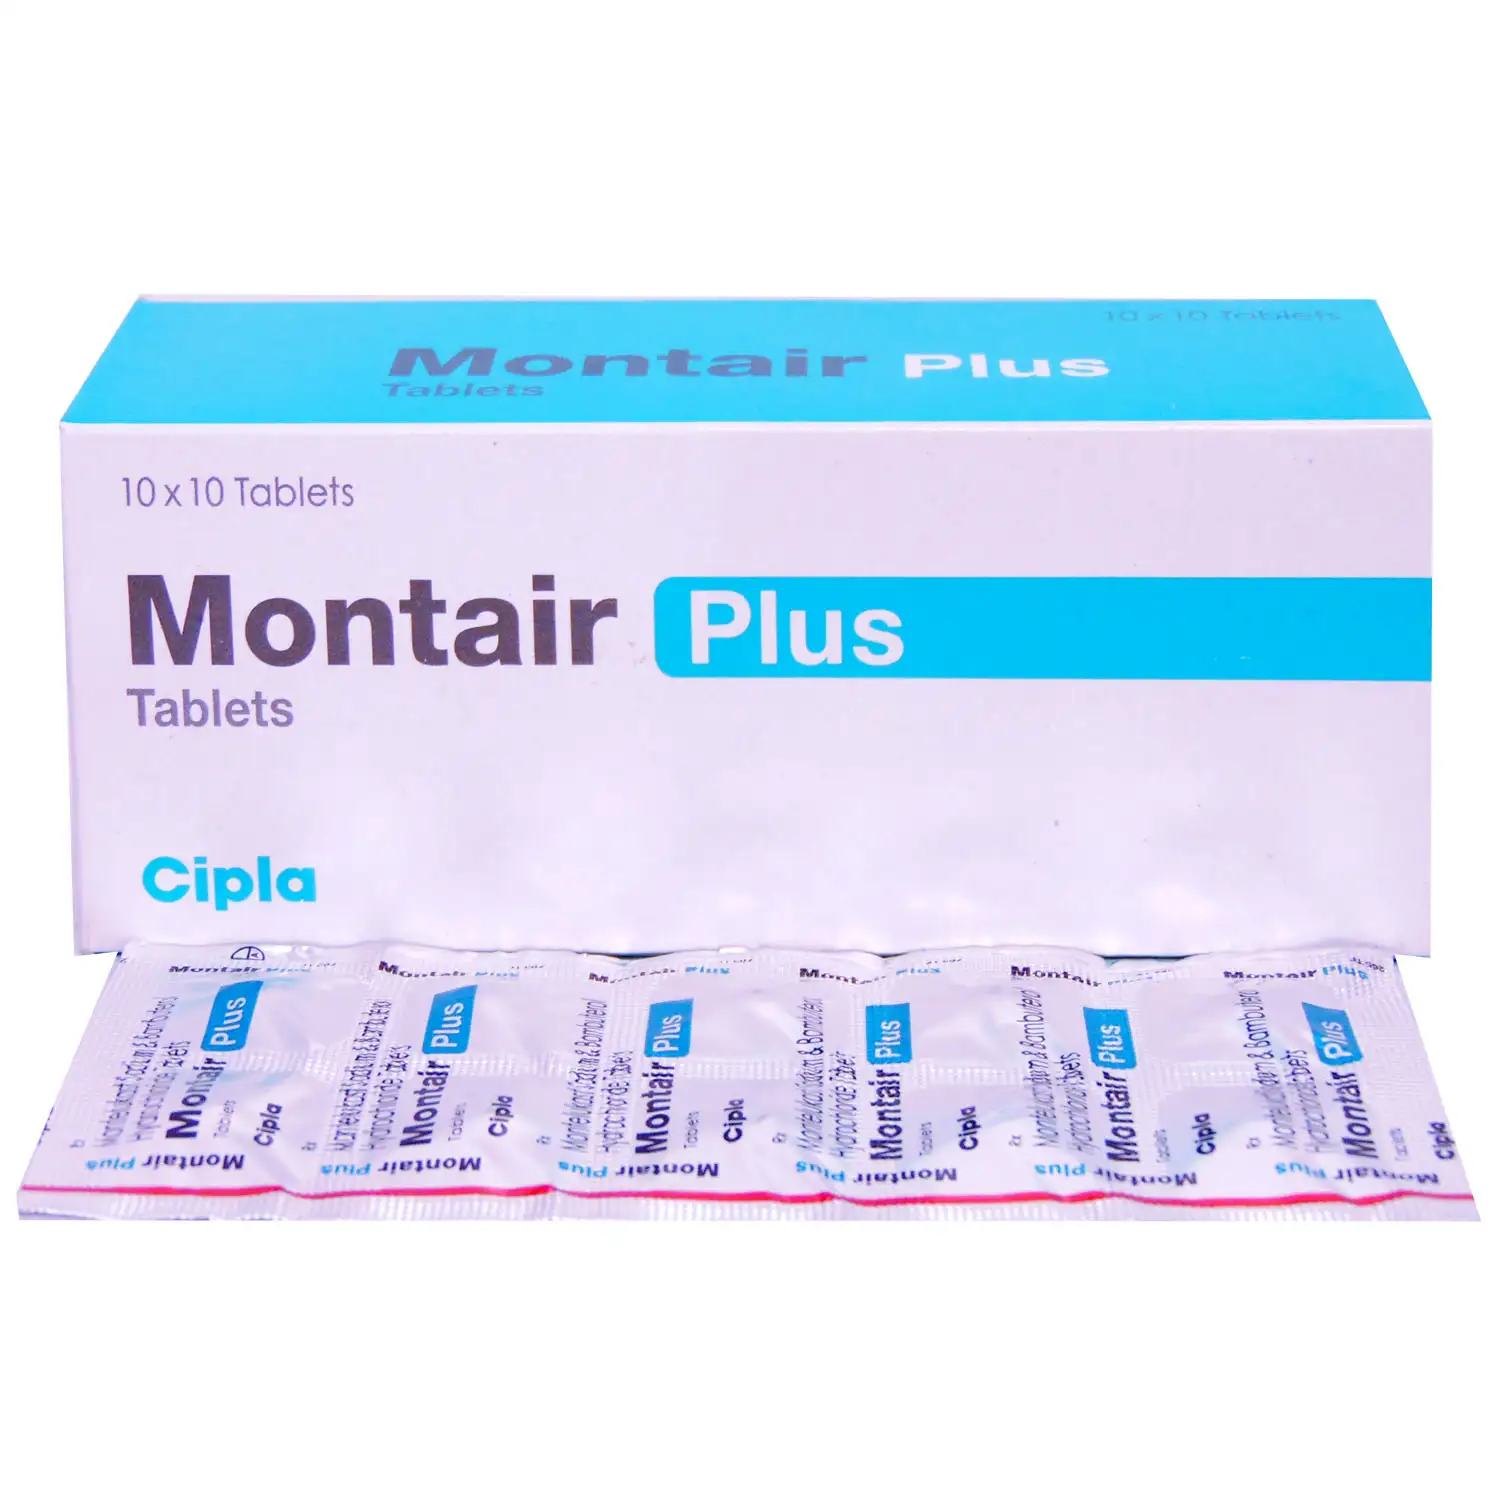 Montair Plus tablet